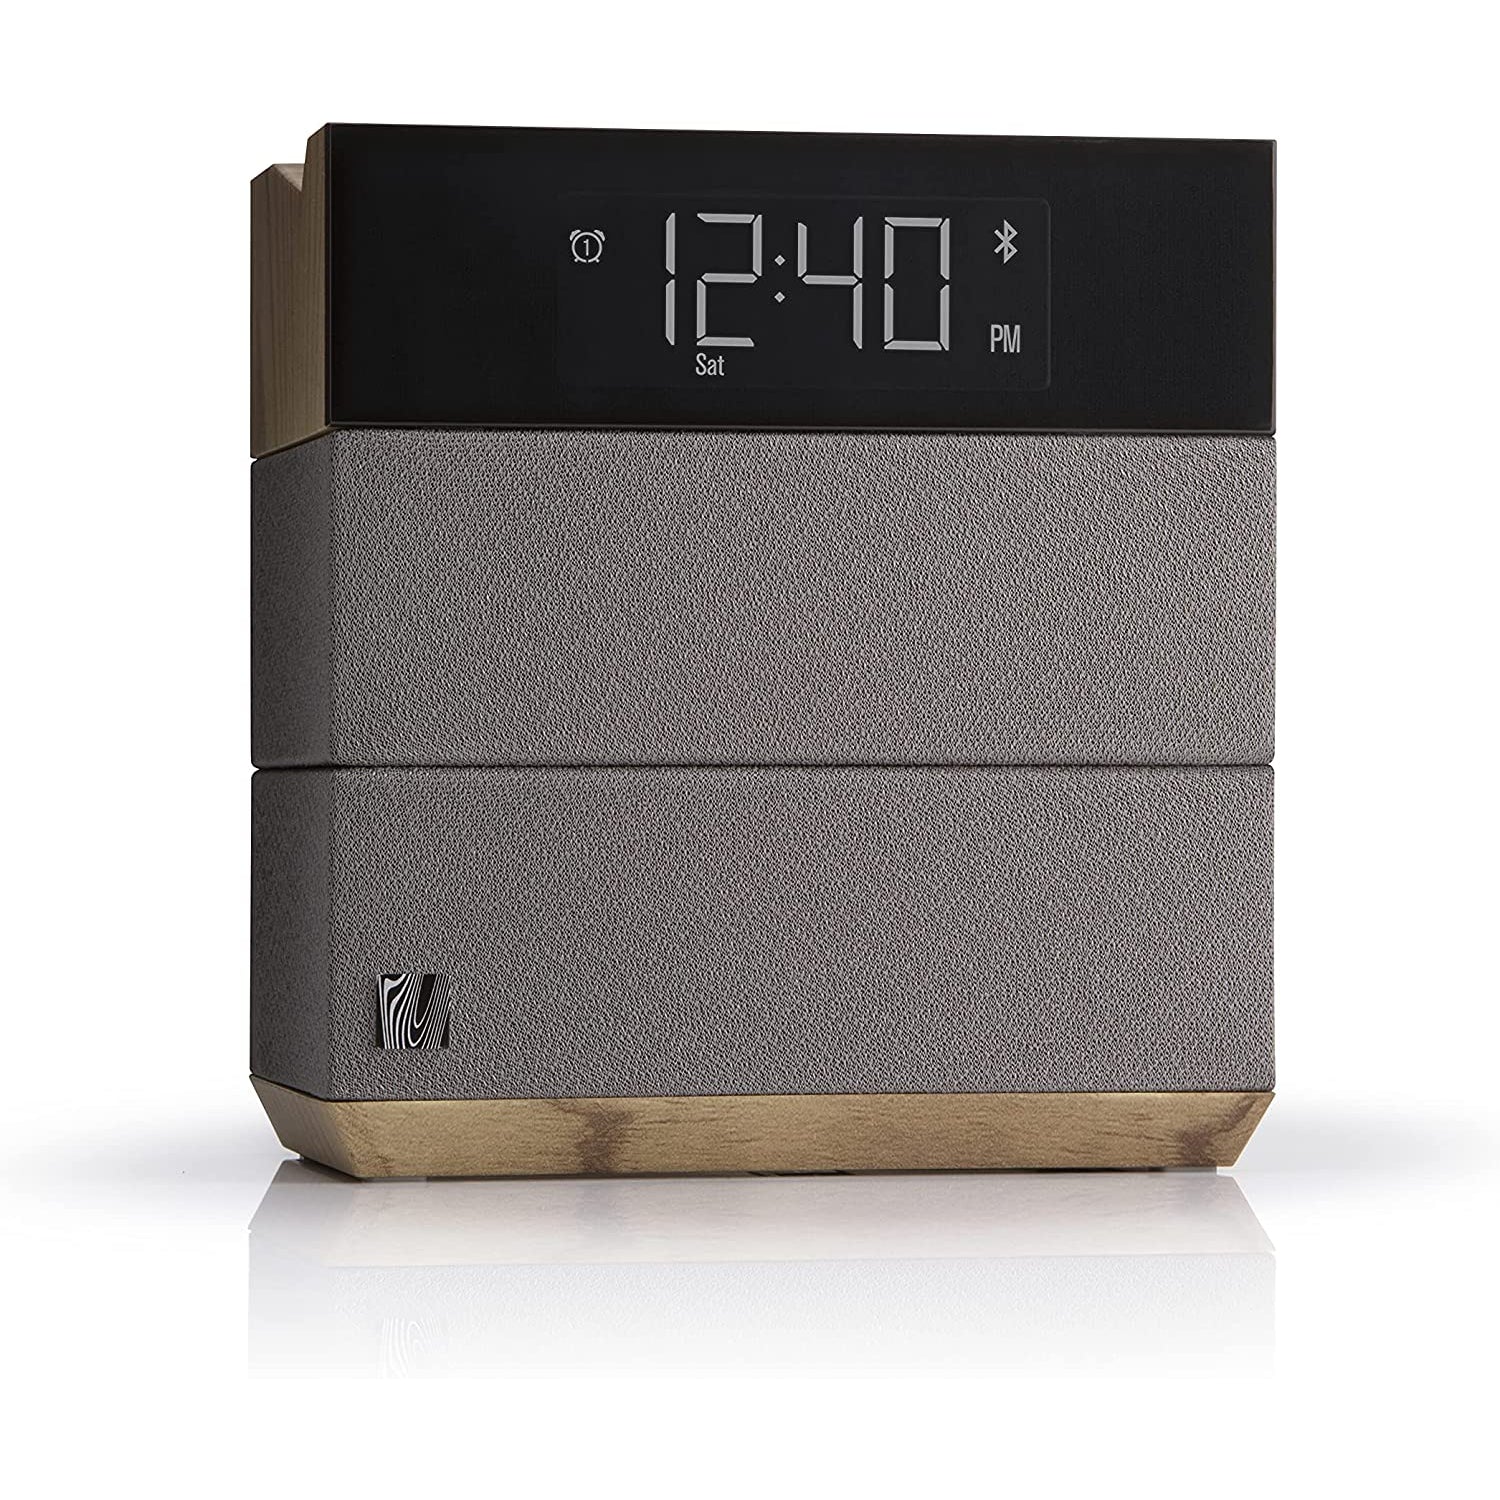 Soundfreaq Sound Rise, Bedside Radio Alarm Clock – FM Wireless Digital Clock Radio with Bluetooth and USB Fast Charging, Speakers & Adjustable Display